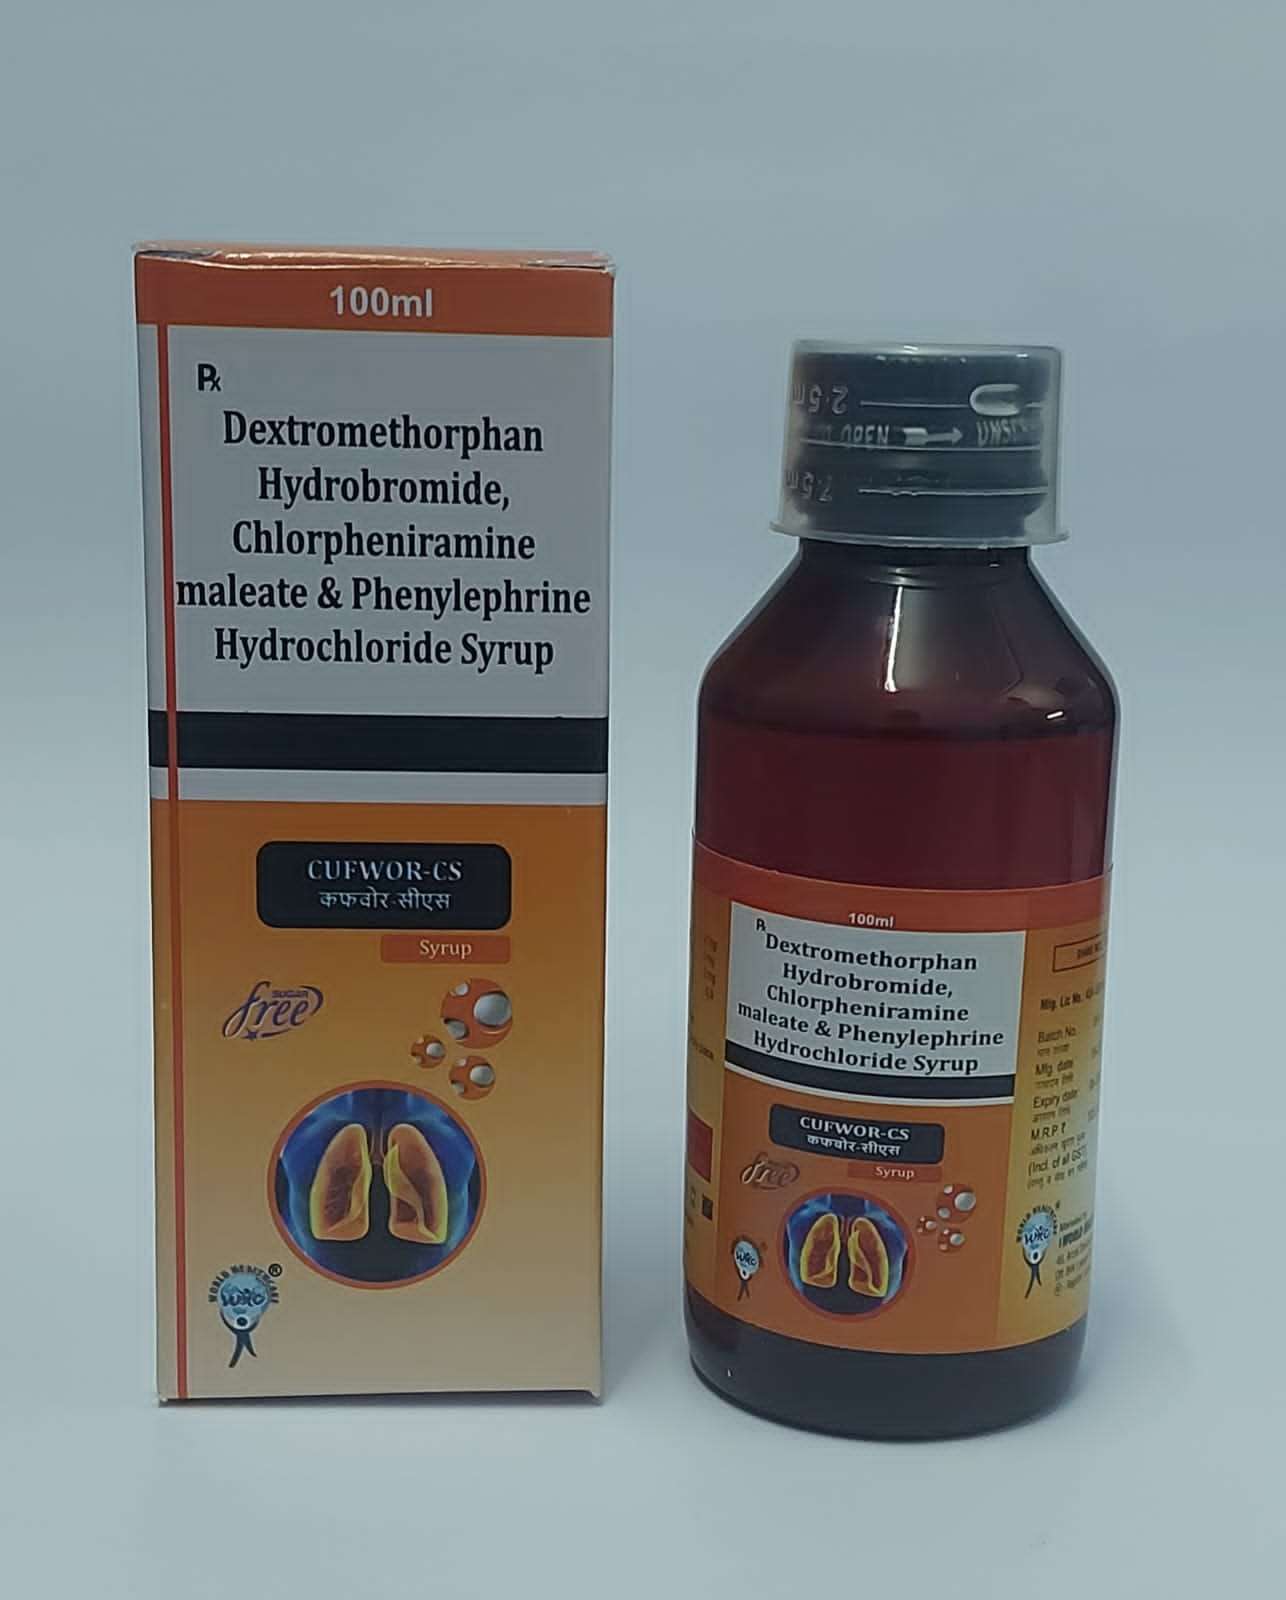 dextromethorphan 10mg + cpm 2mg + phenylephrine 5 mg